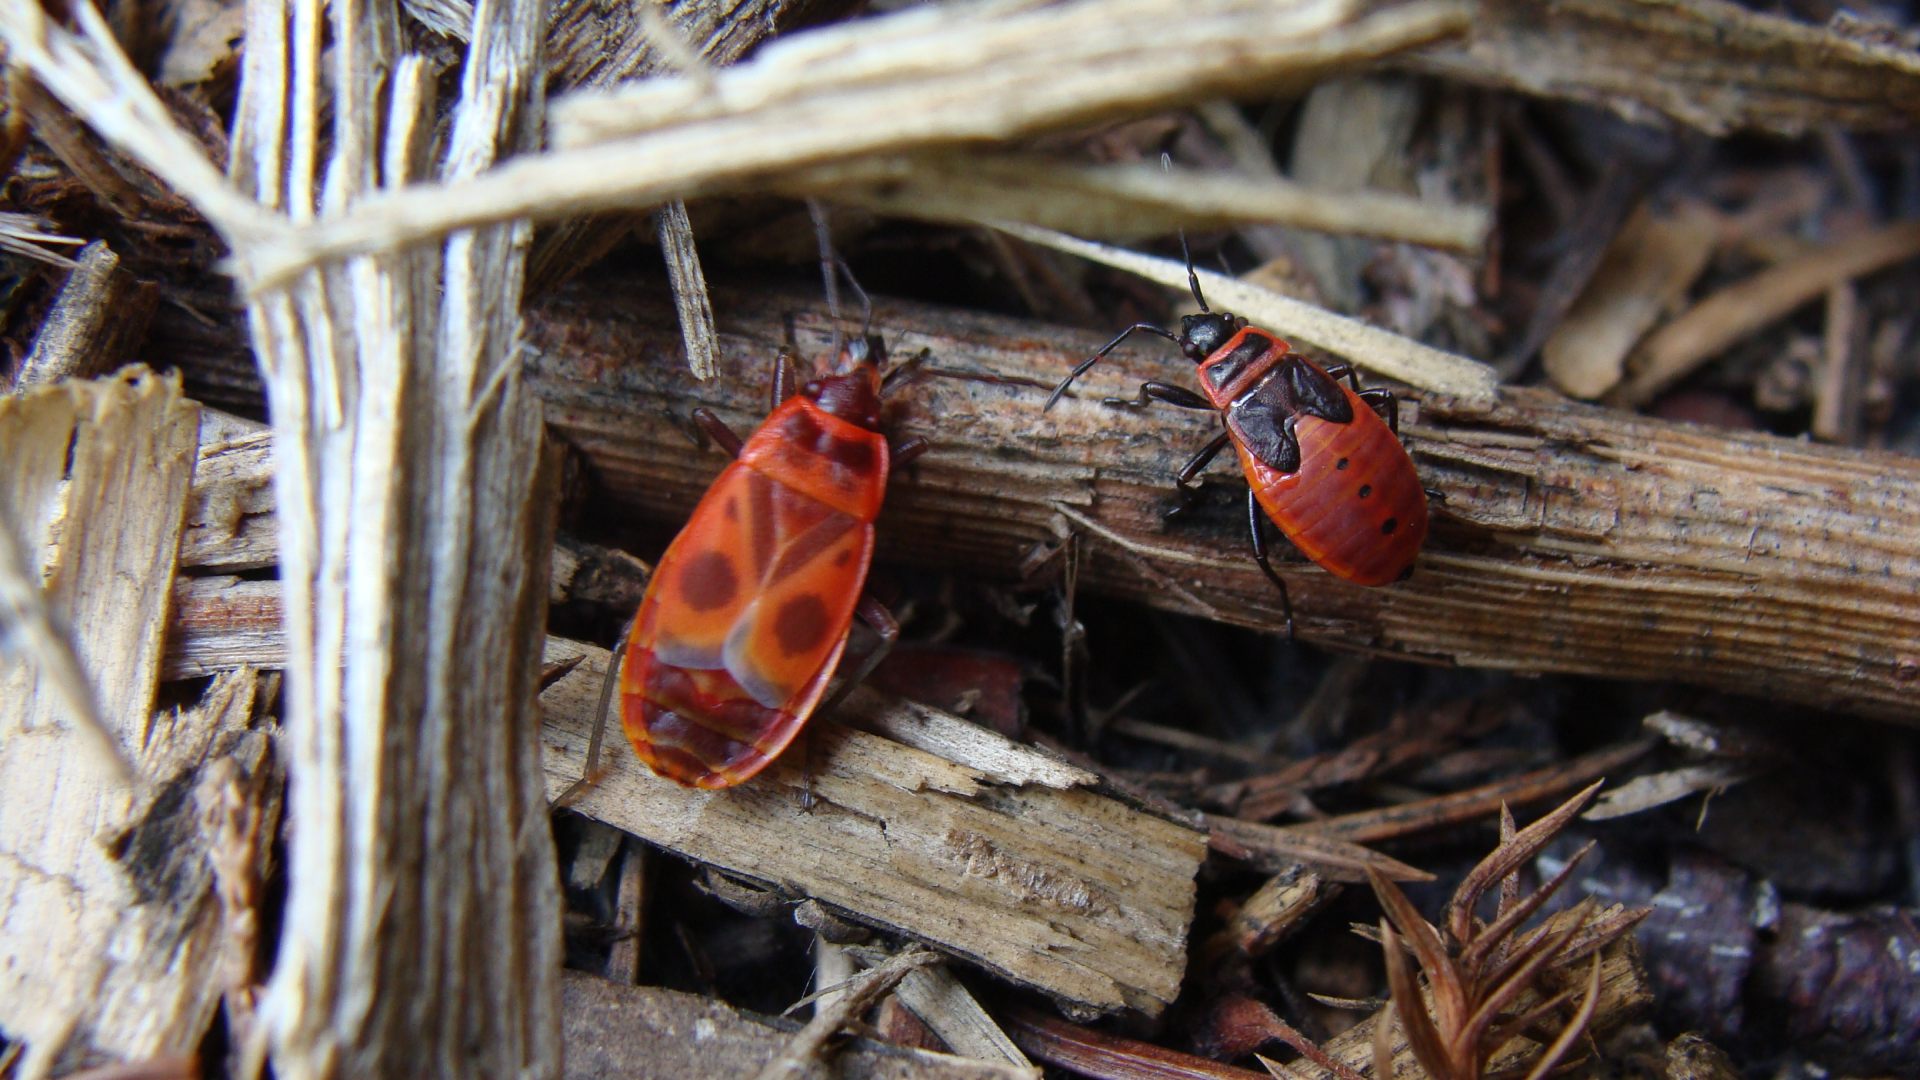 Chinch bugs found in lawn debris in Emmaus, PA.